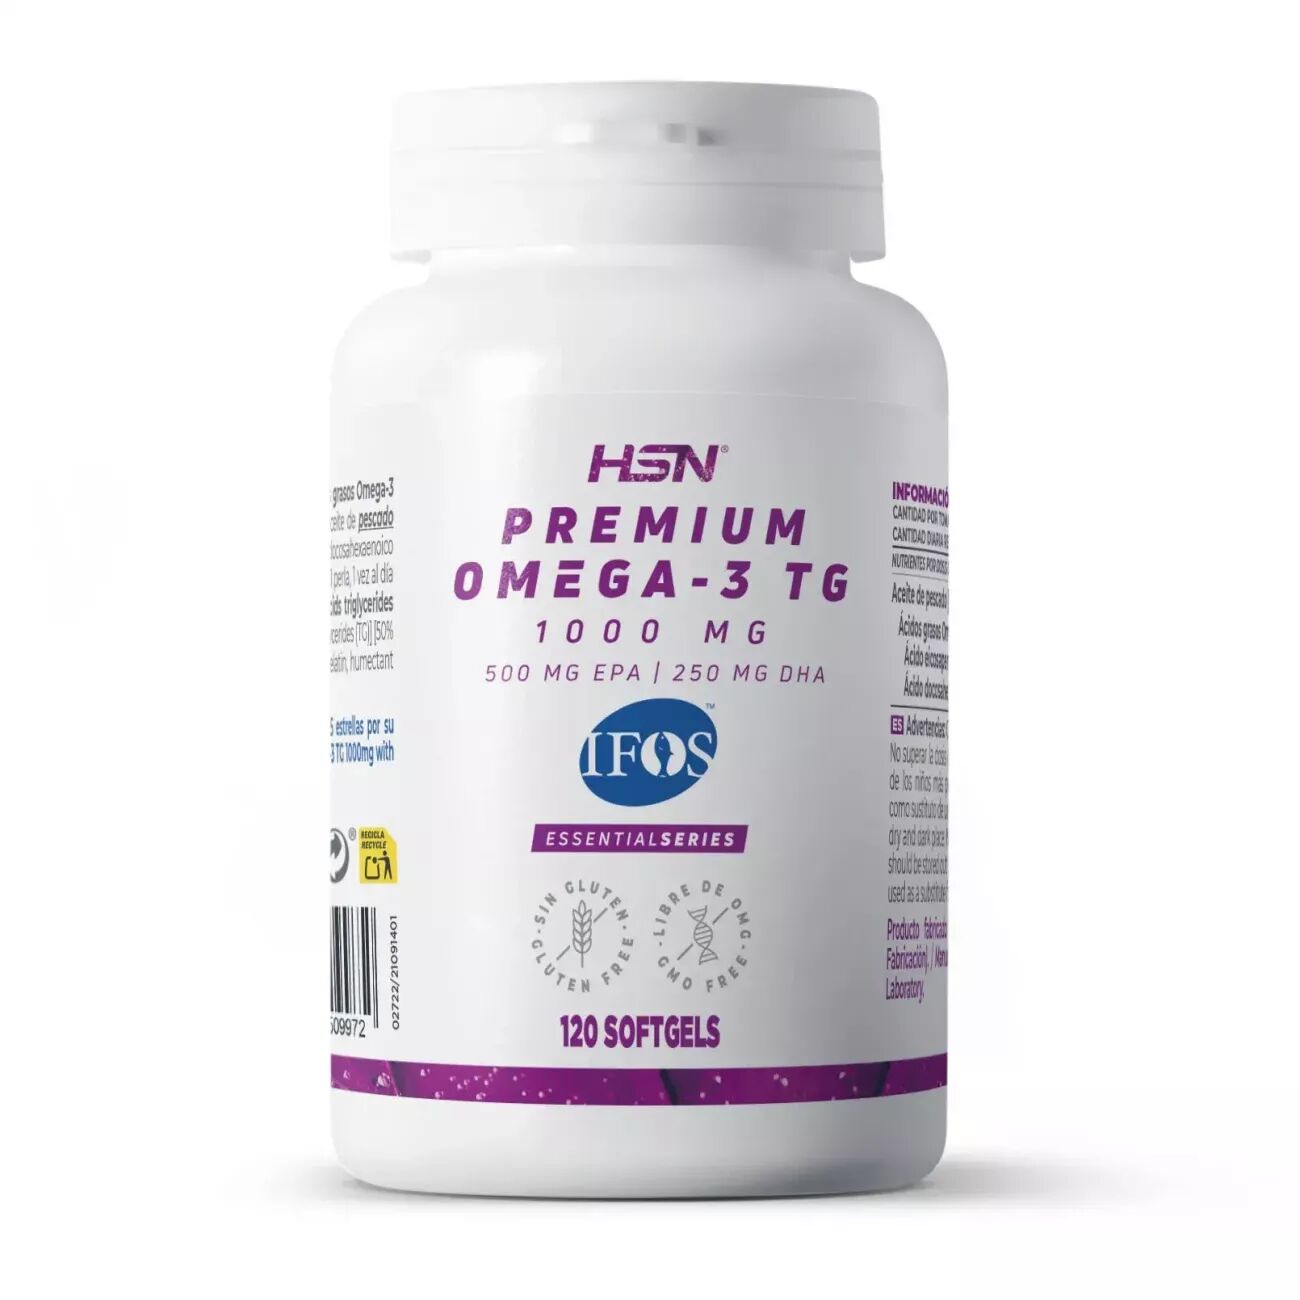 HSN Premium omega-3 tg (ifos) 1000mg - 120 perlas